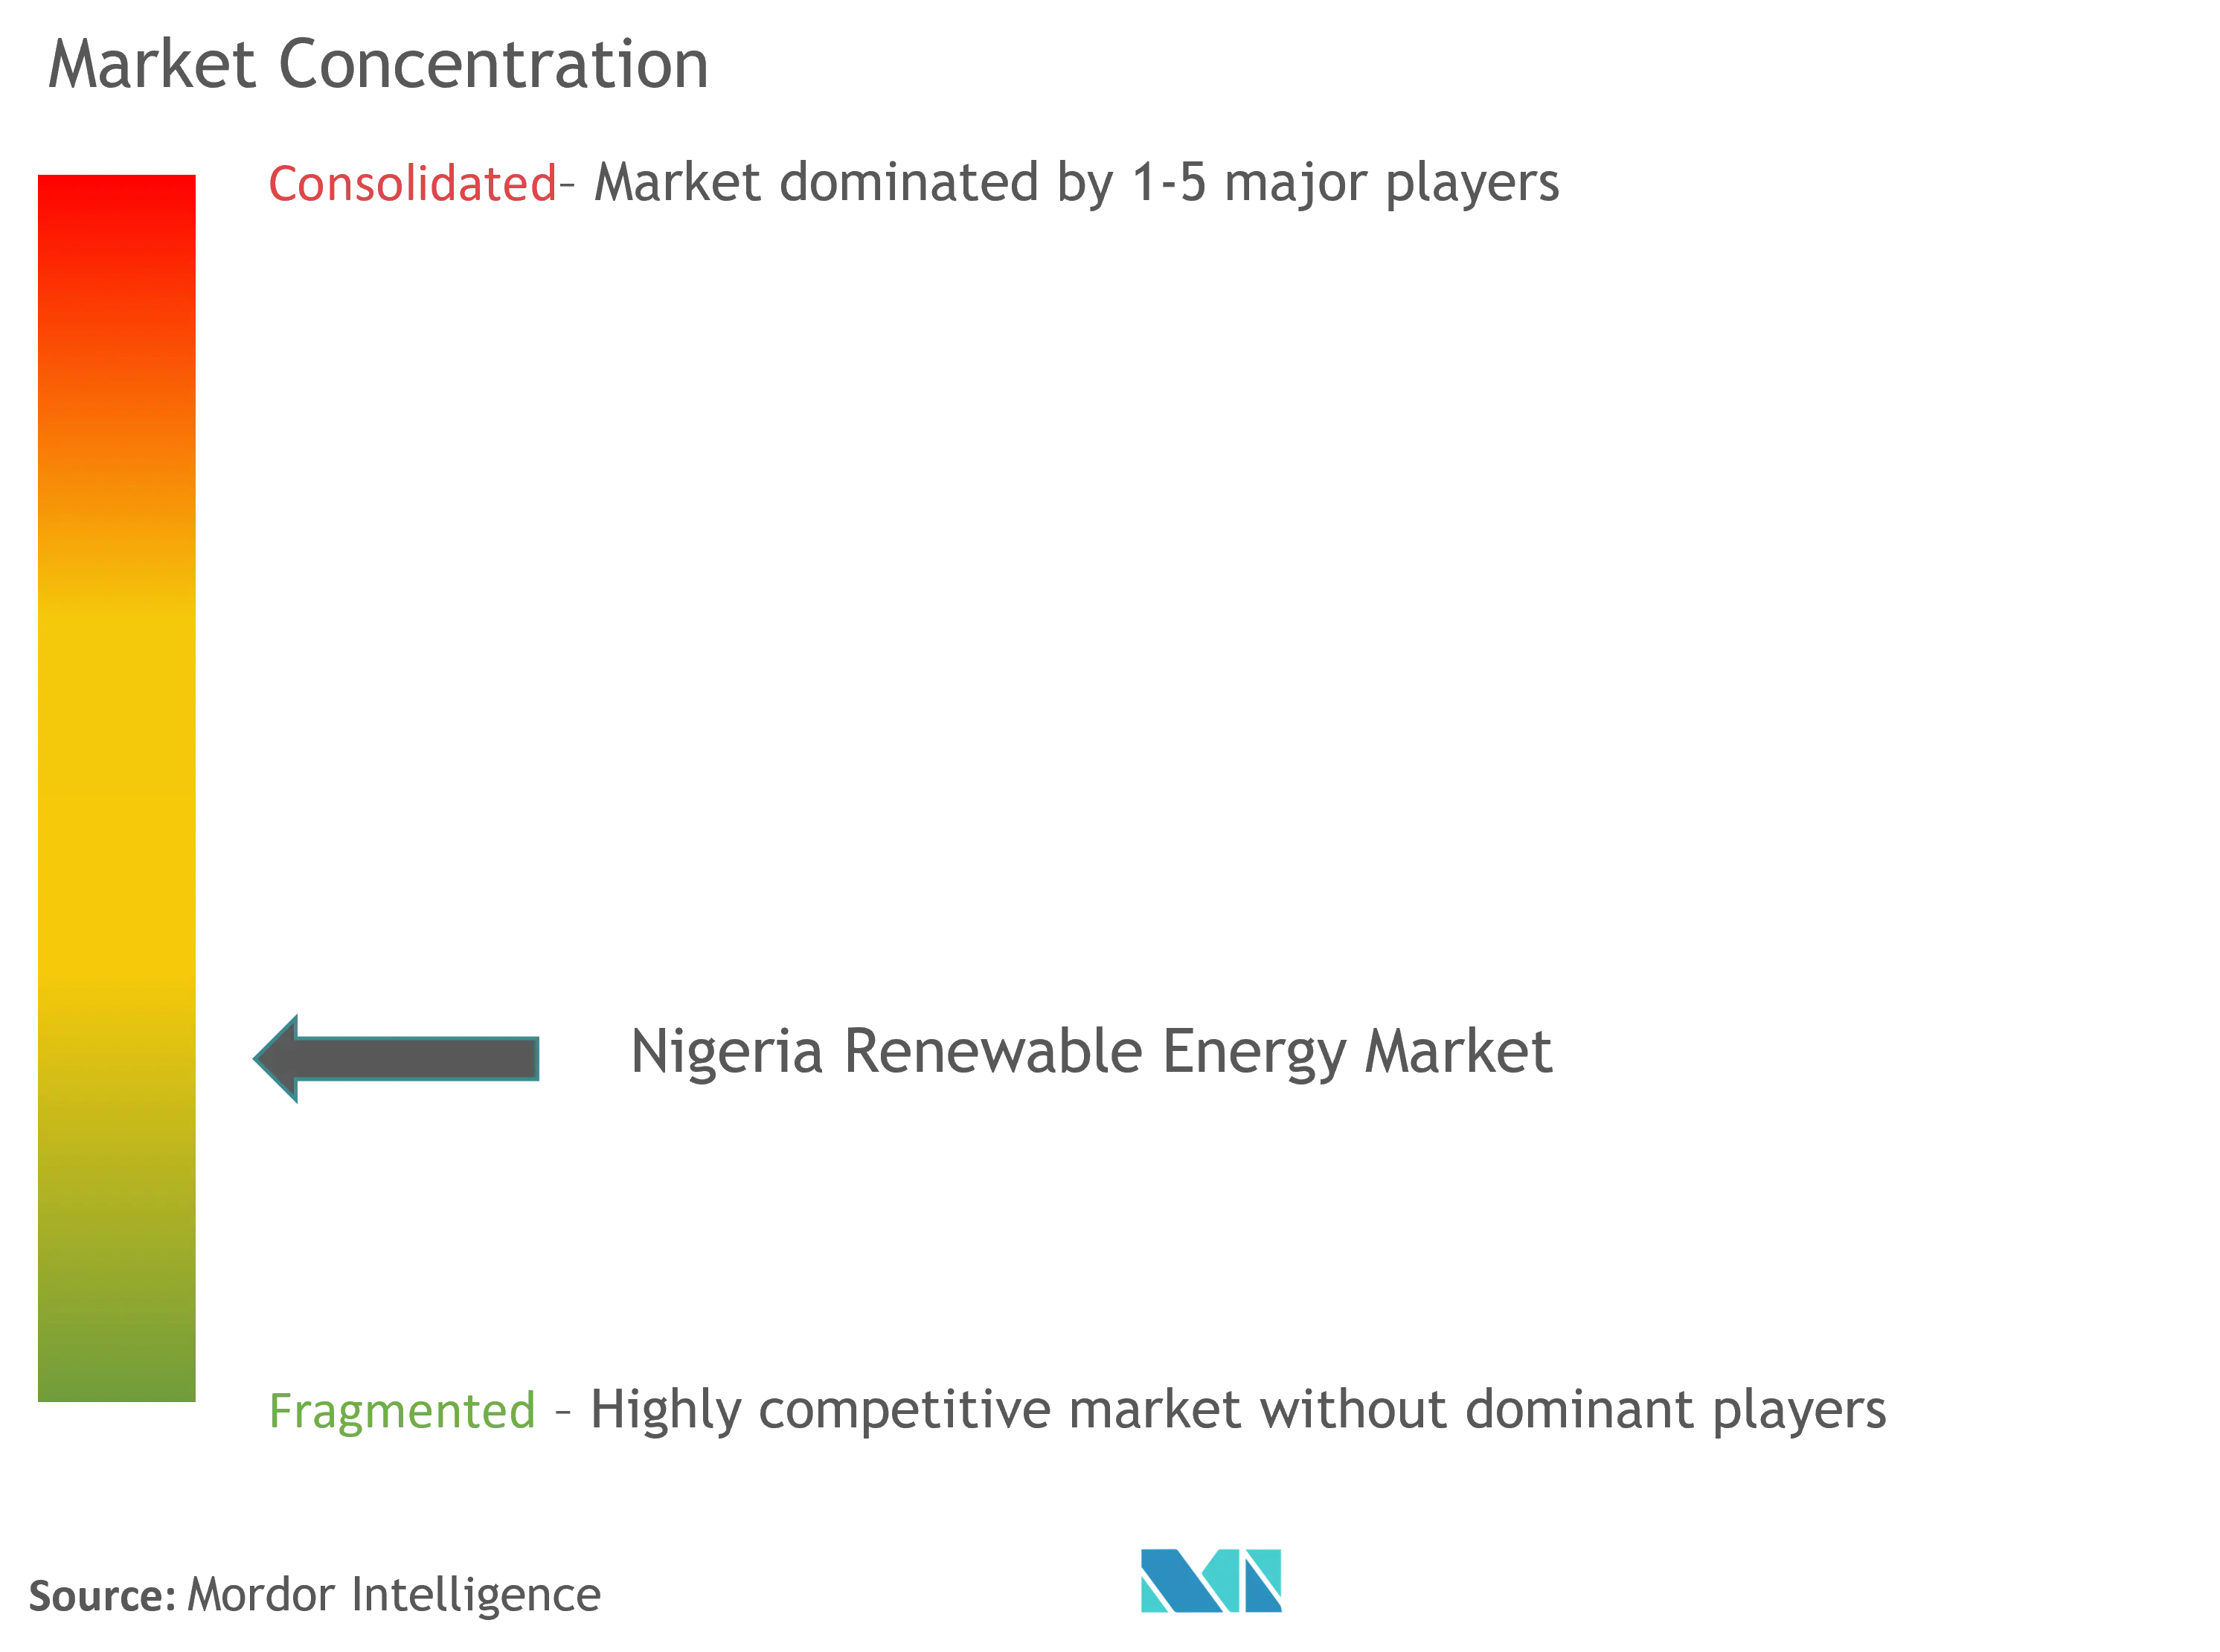 Nigeria Renewable Energy Market Concentration